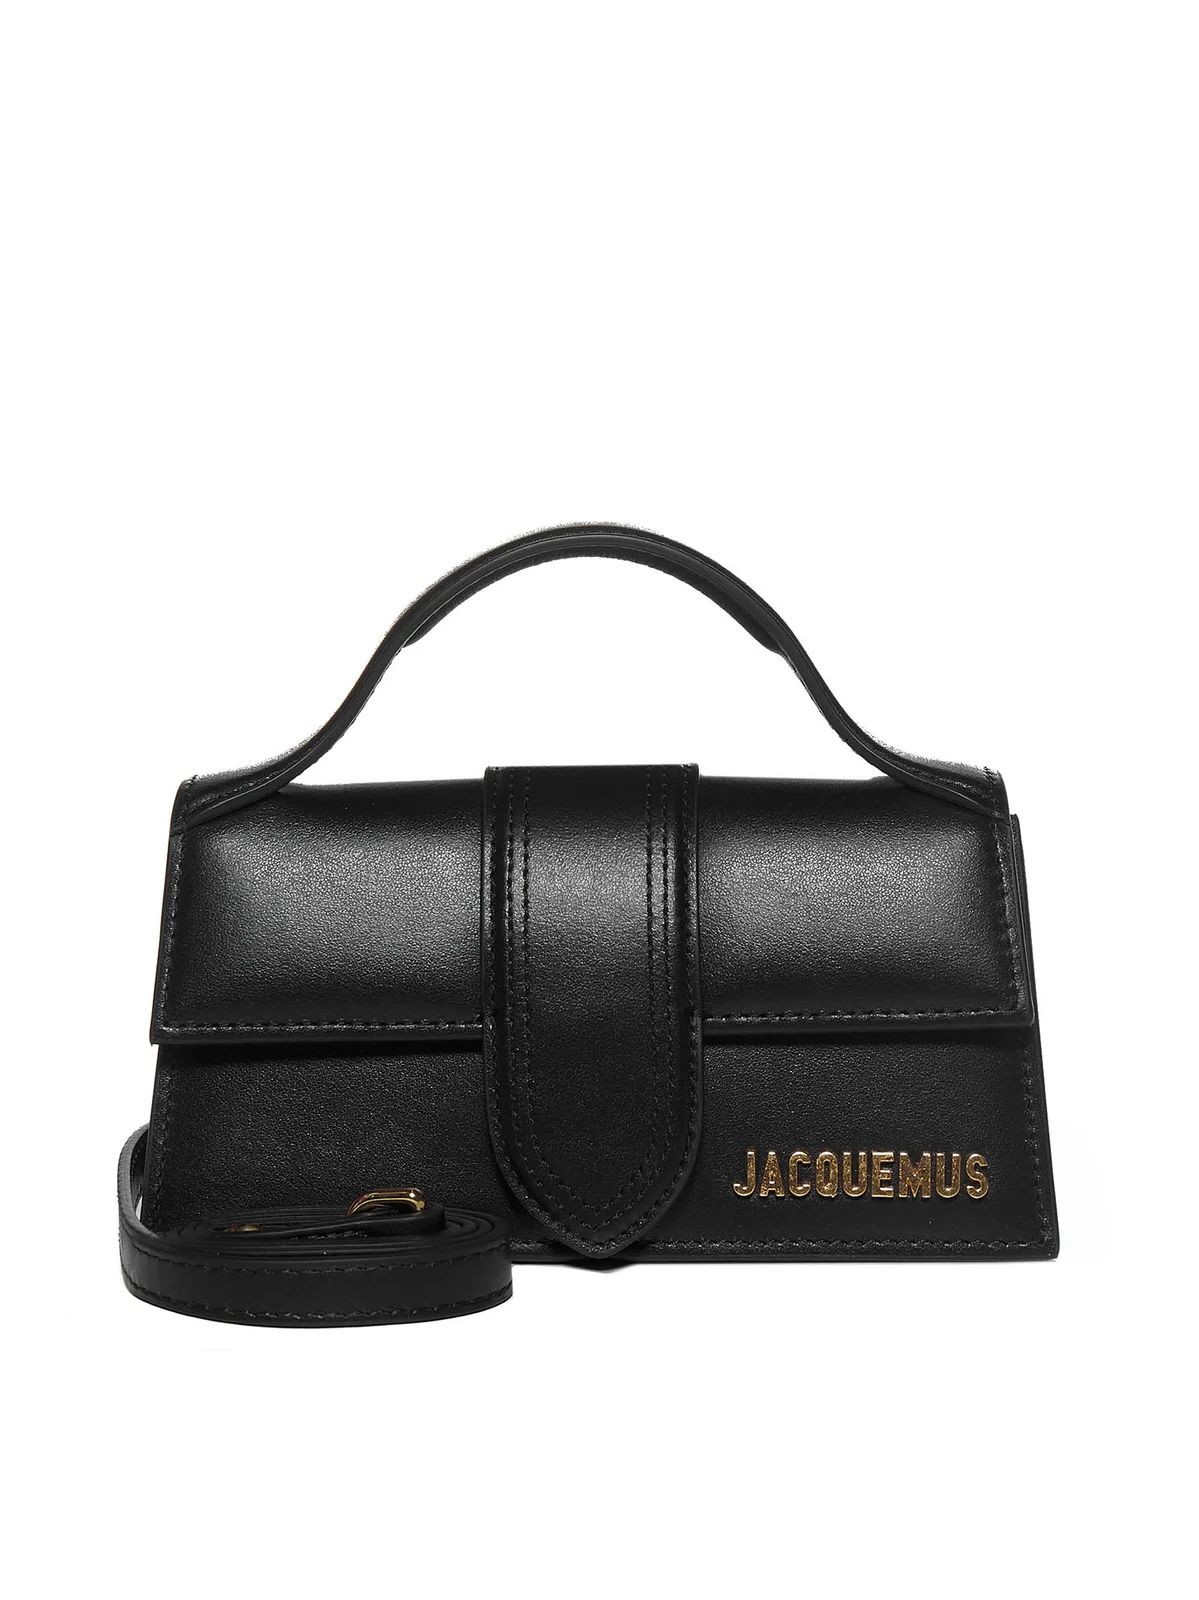 Jacquemus Le Bambino Mini Tote Bag | Cettire Global